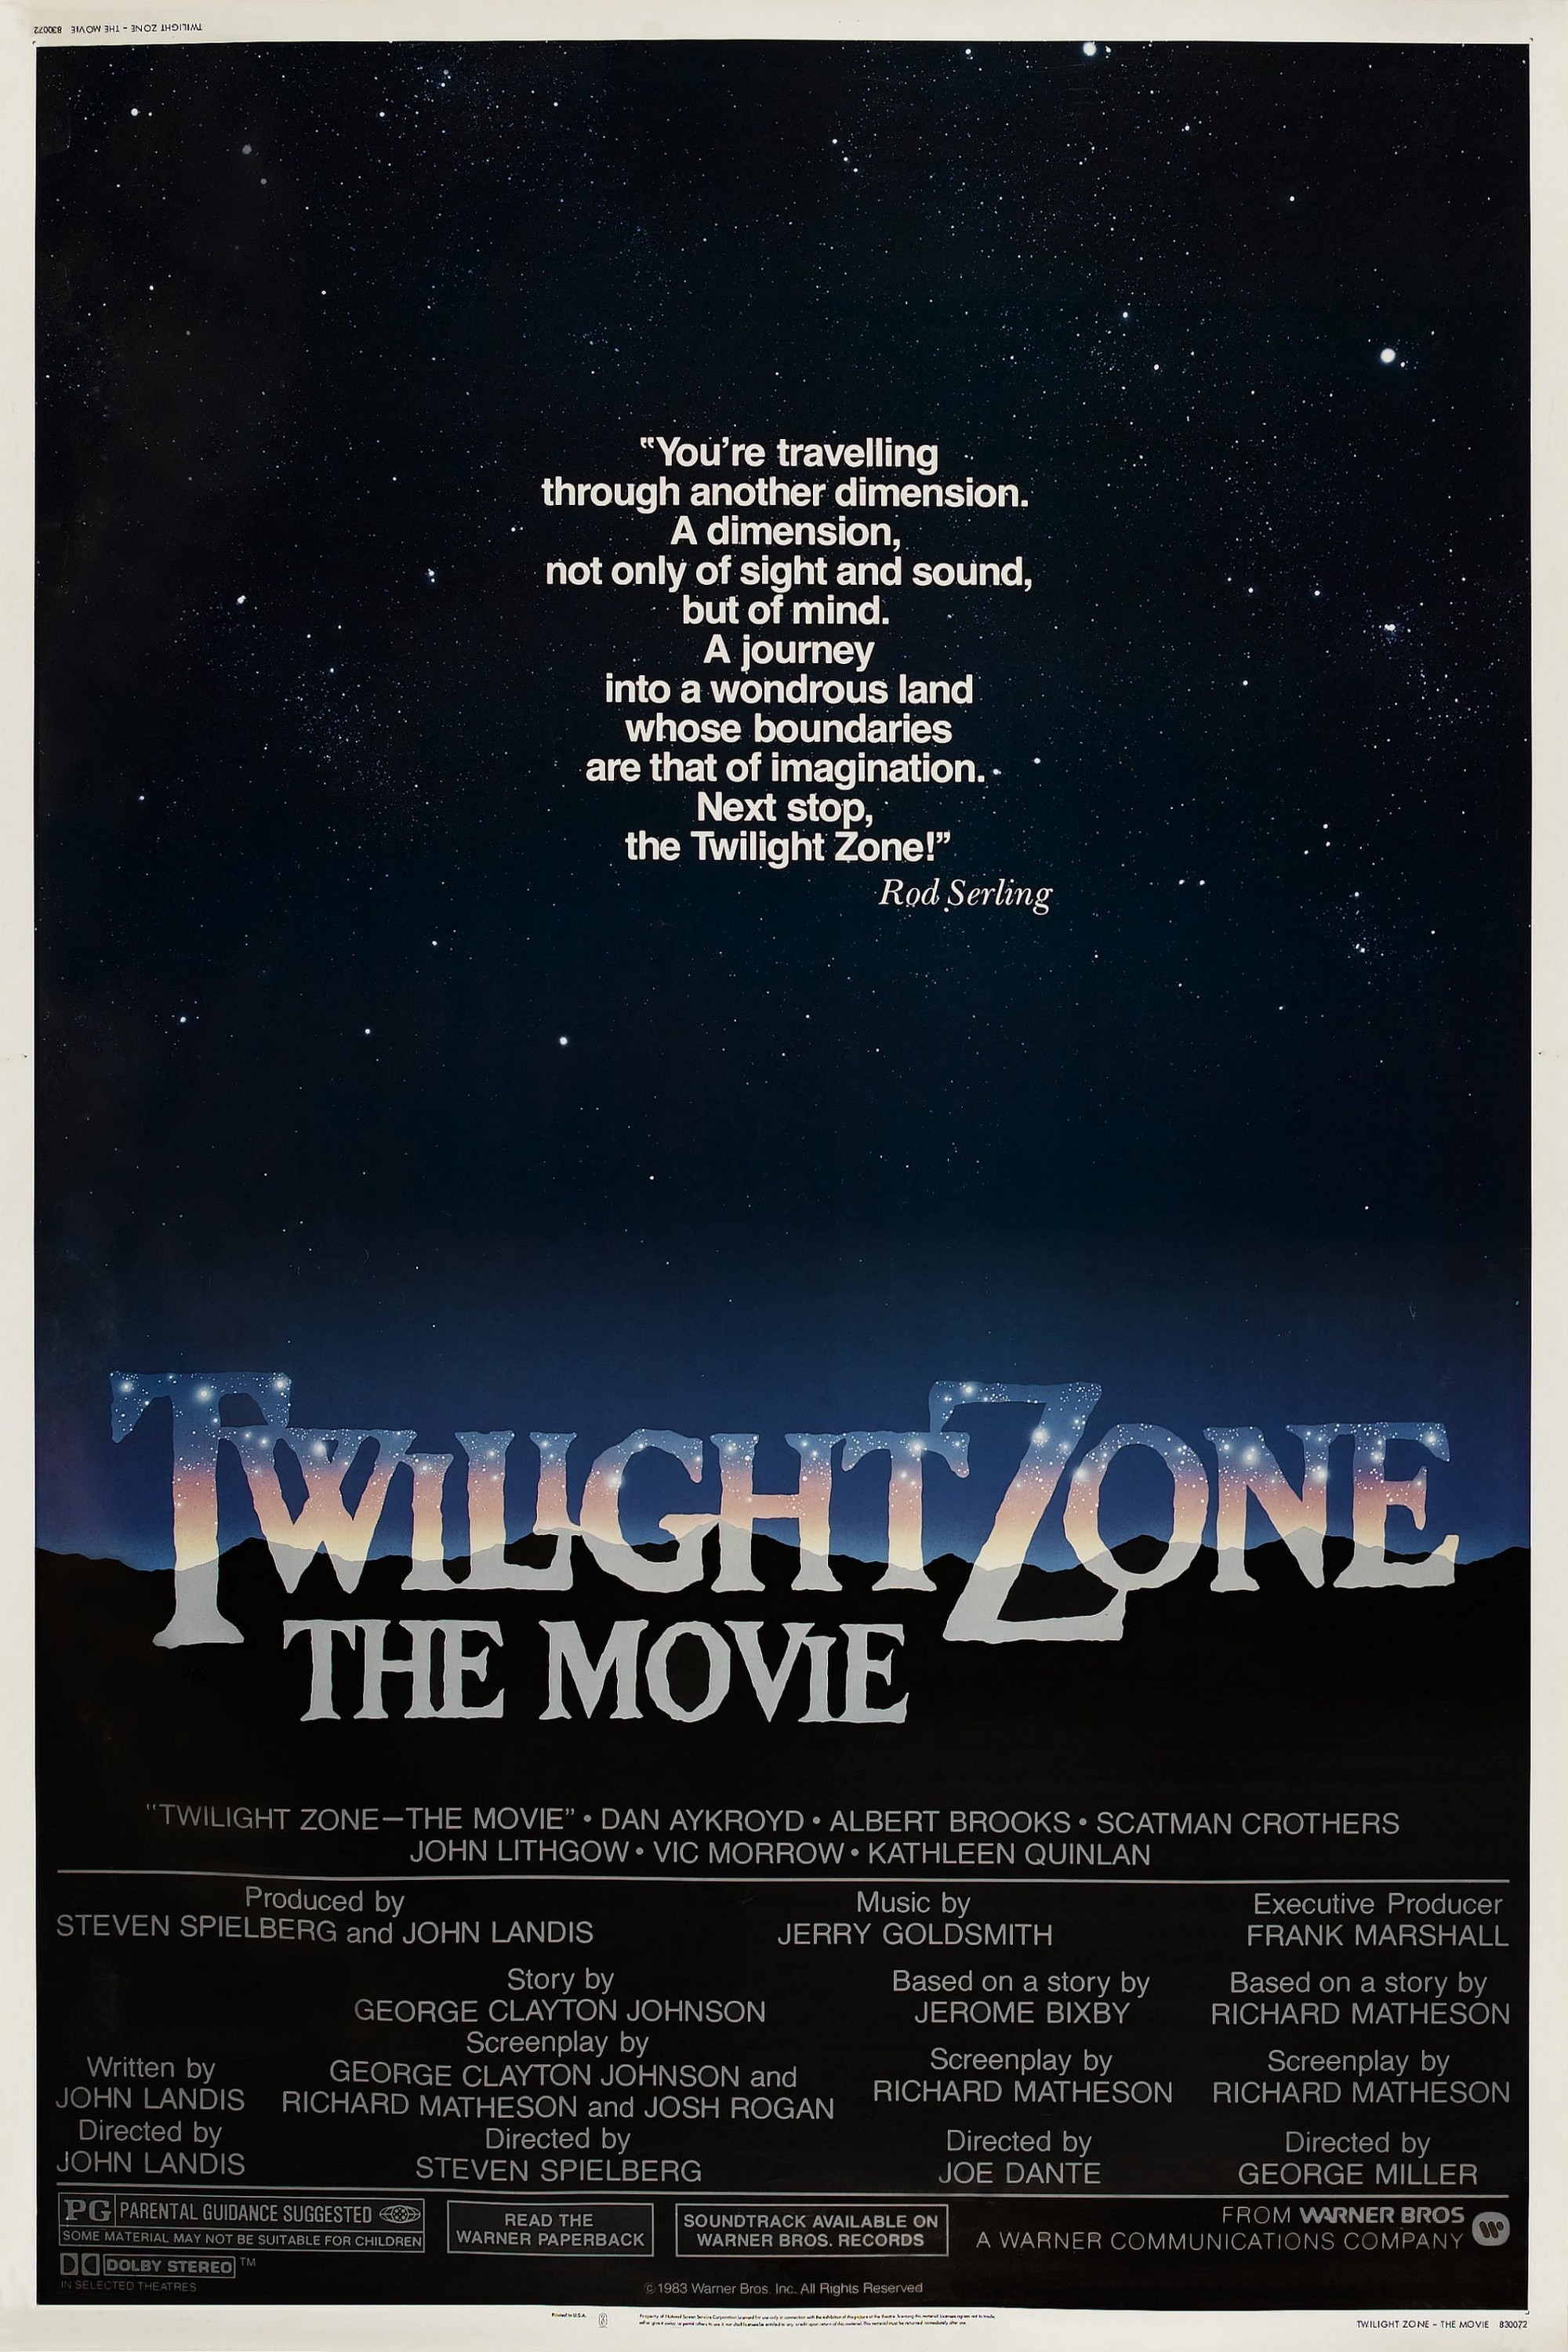 Mega Sized Movie Poster Image for Twilight Zone: The Movie 